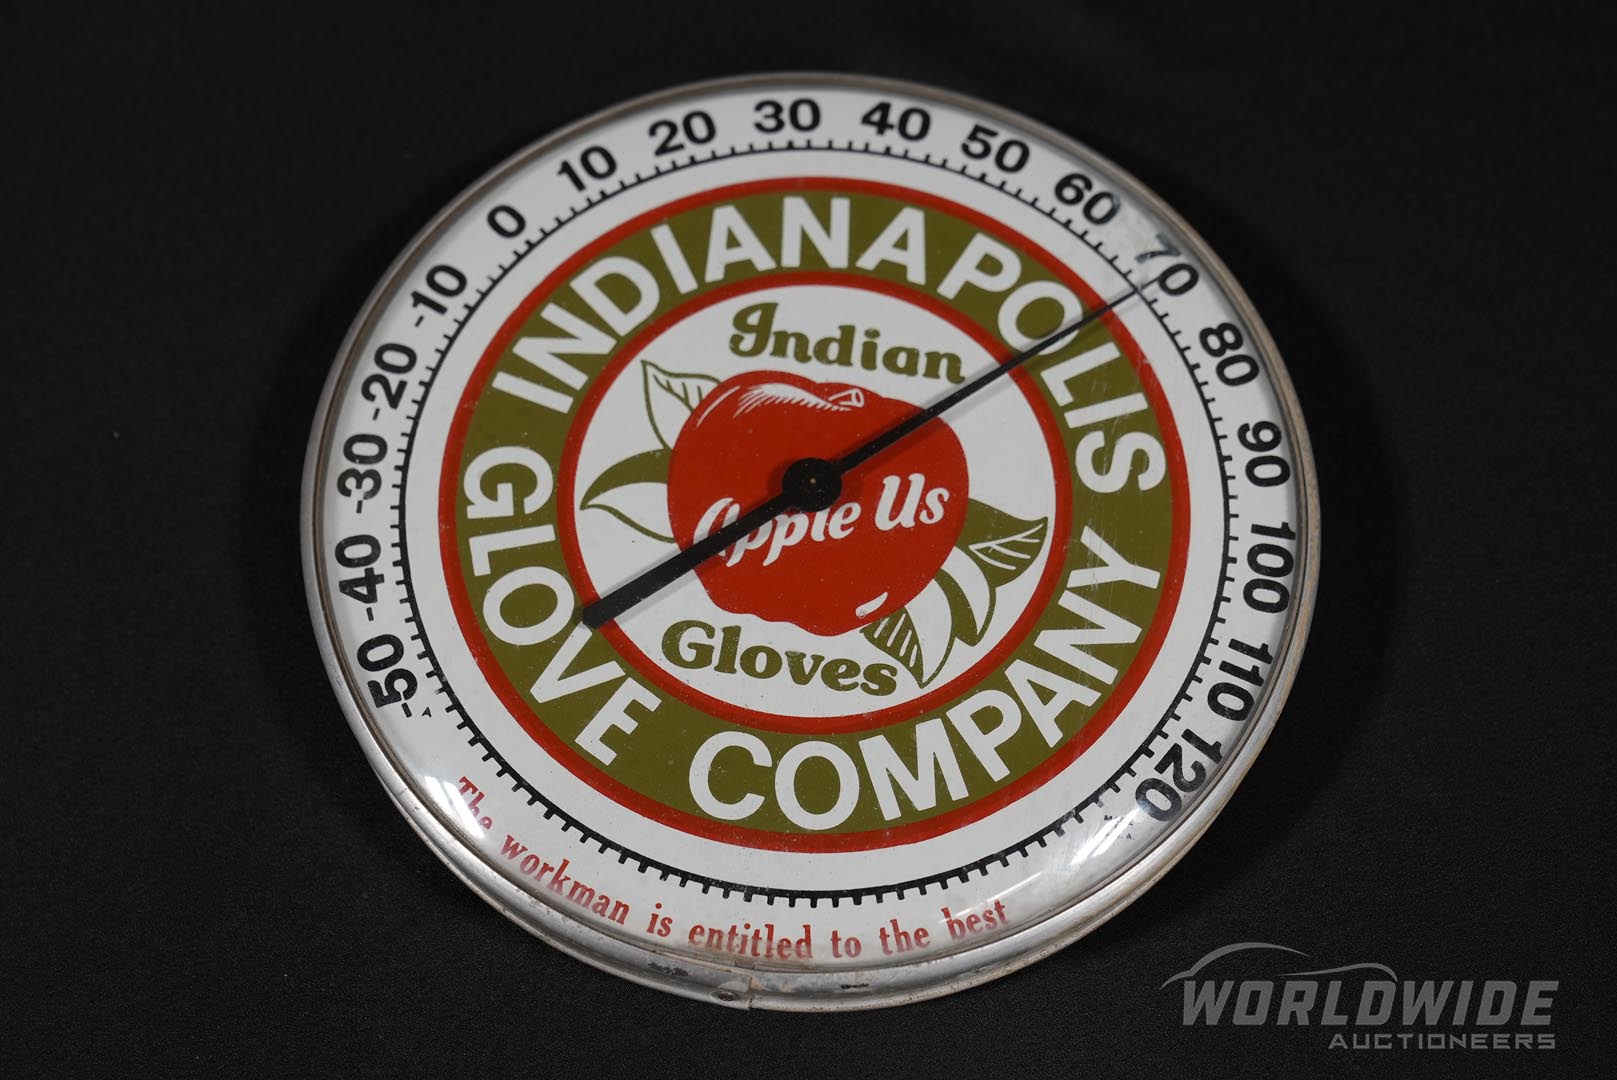  Indianapolis Glove Company The rmometer 